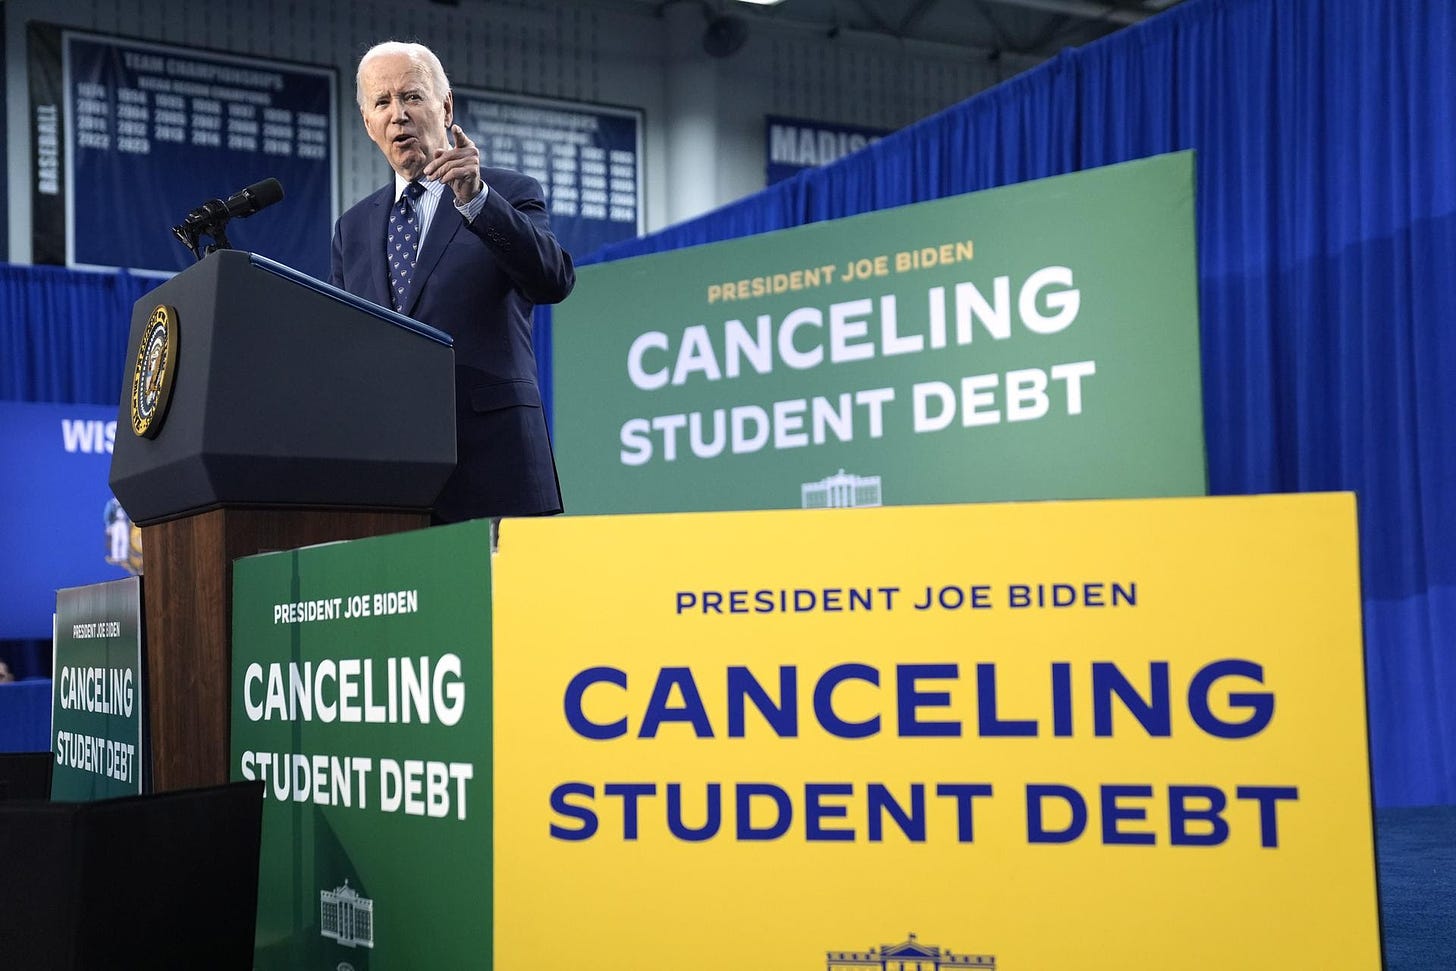 Joe Biden delivers remarks on student loan debt in Wisconsin.